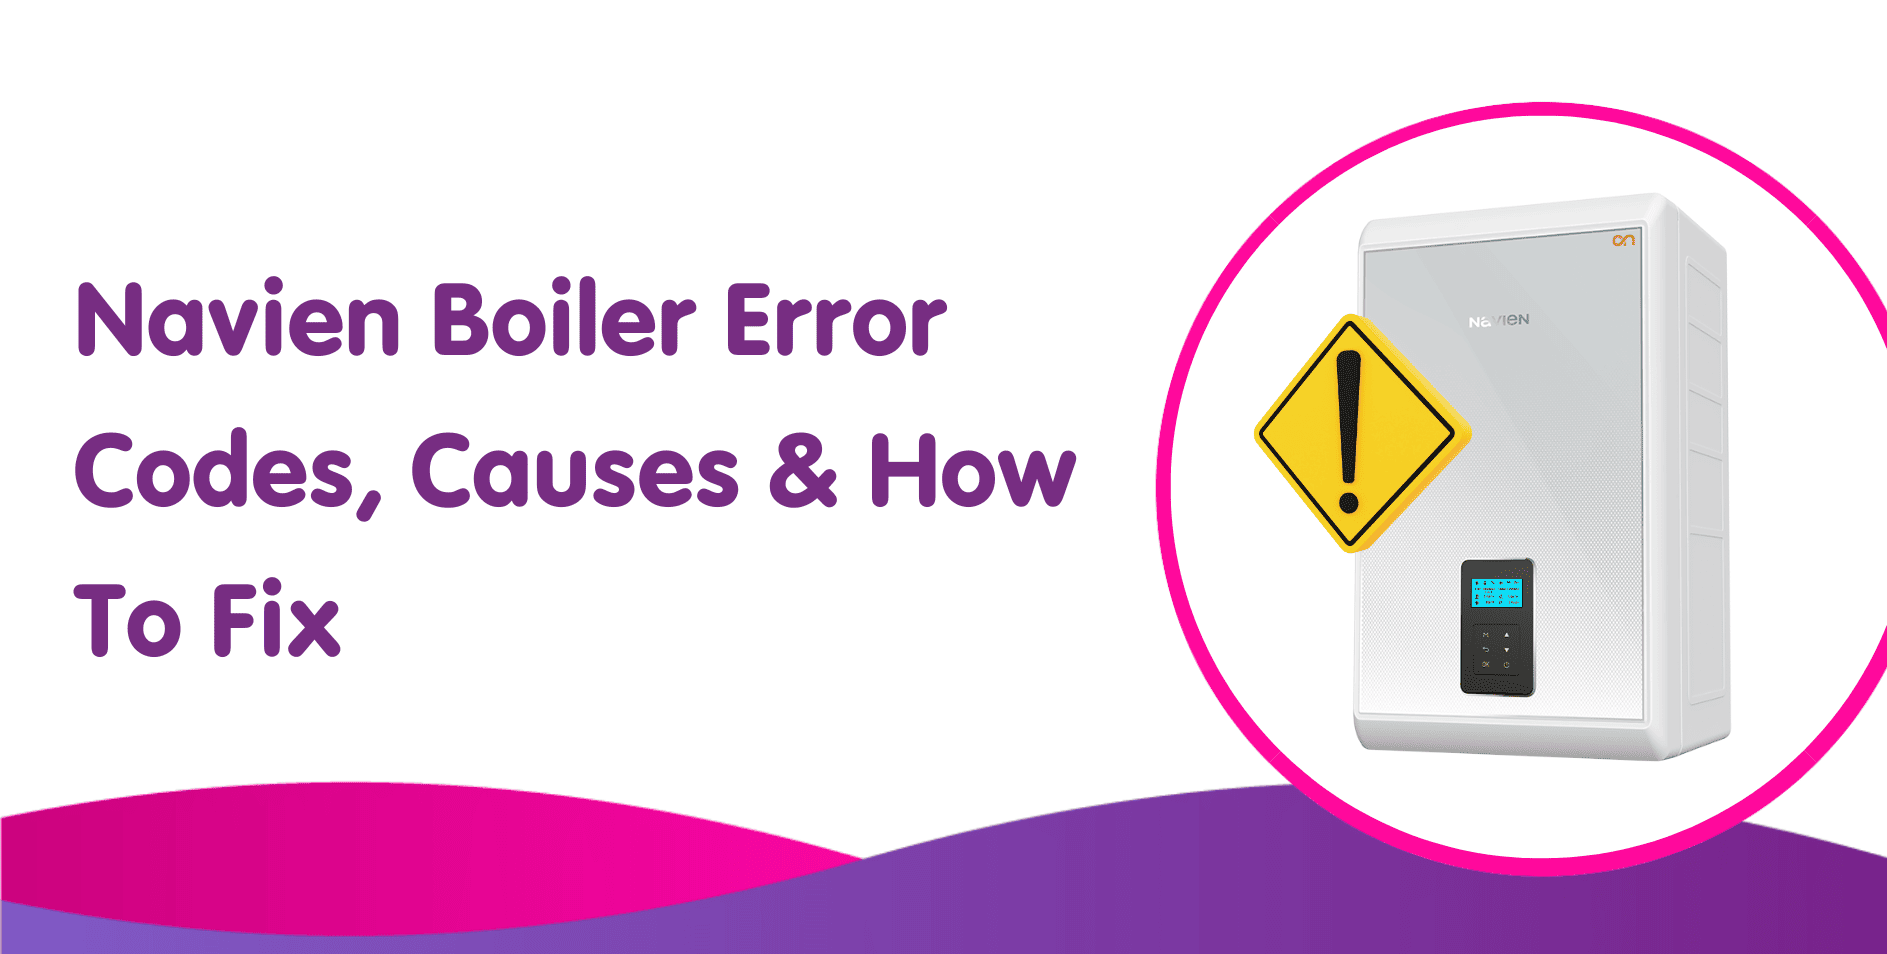 Navien Boiler Error Codes, Causes & How To Fix